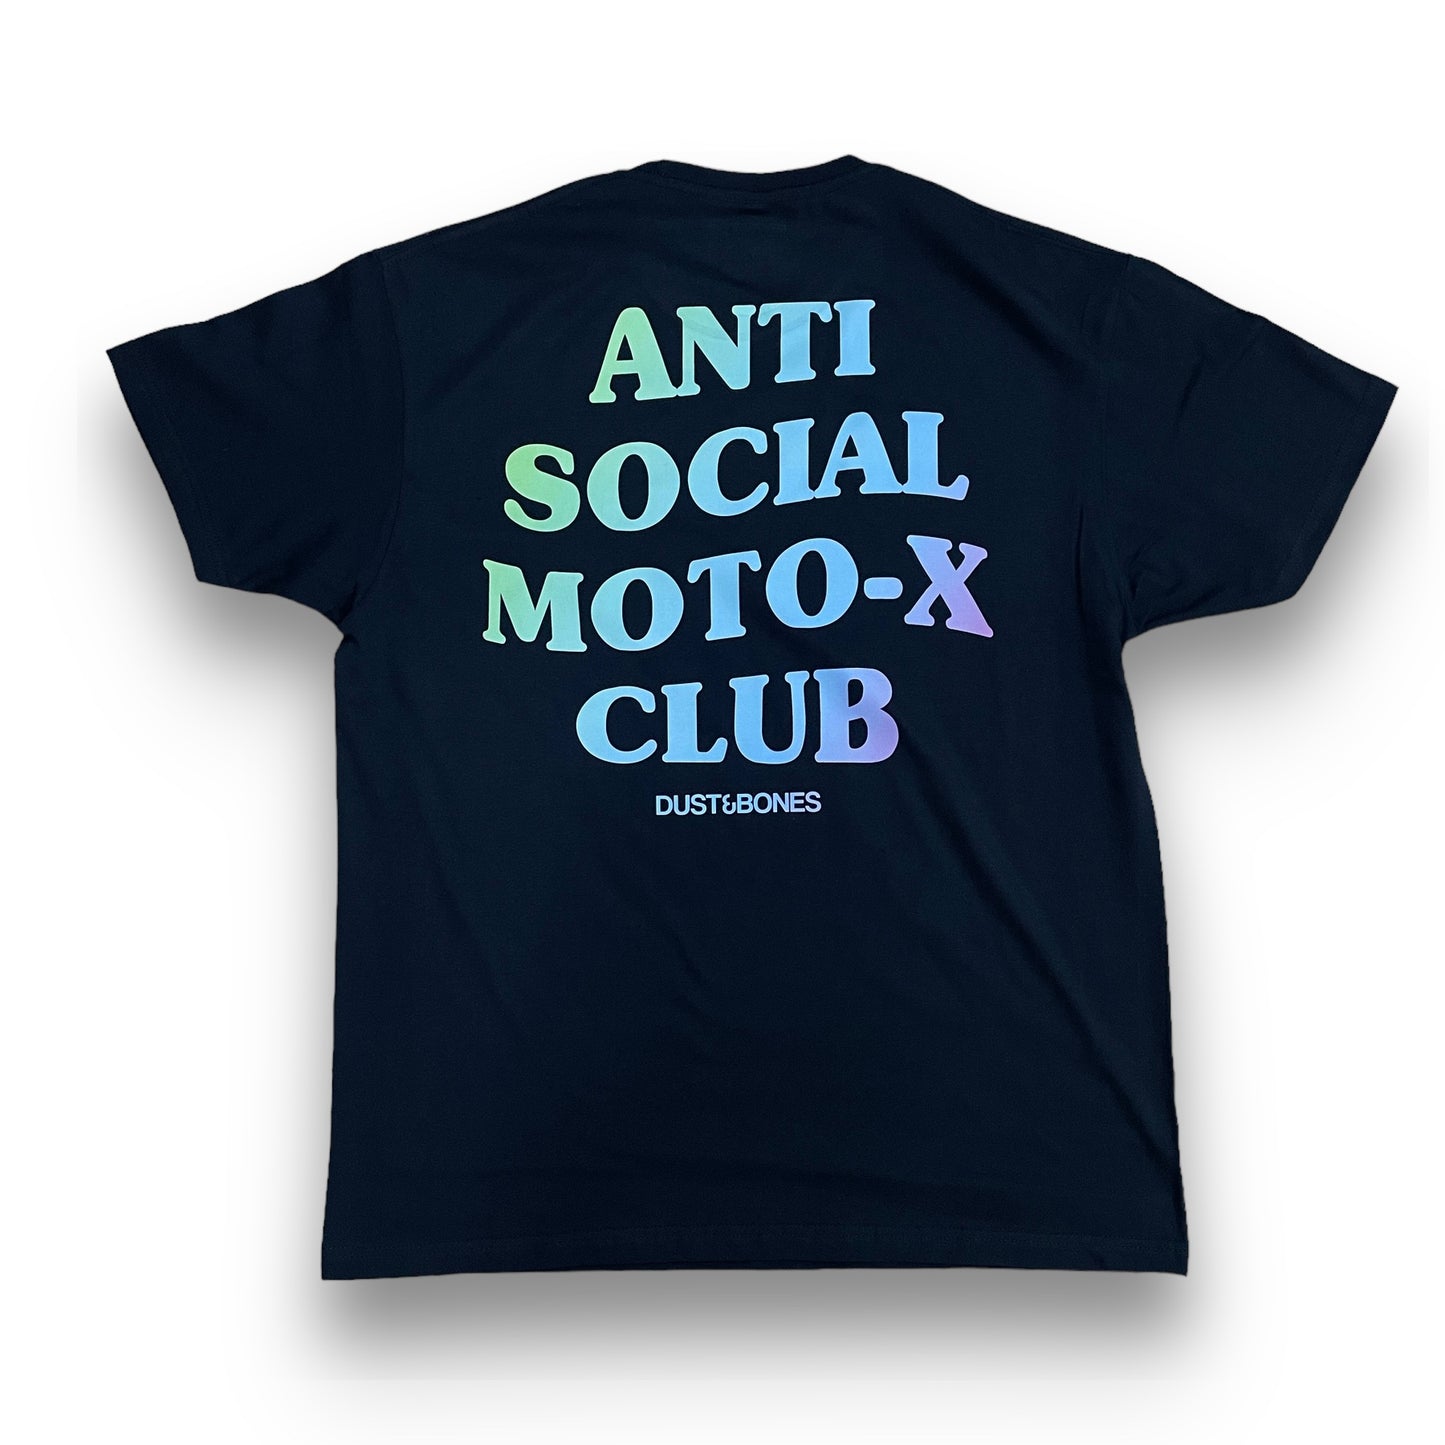 Camiseta Anti Social Moto-X Club